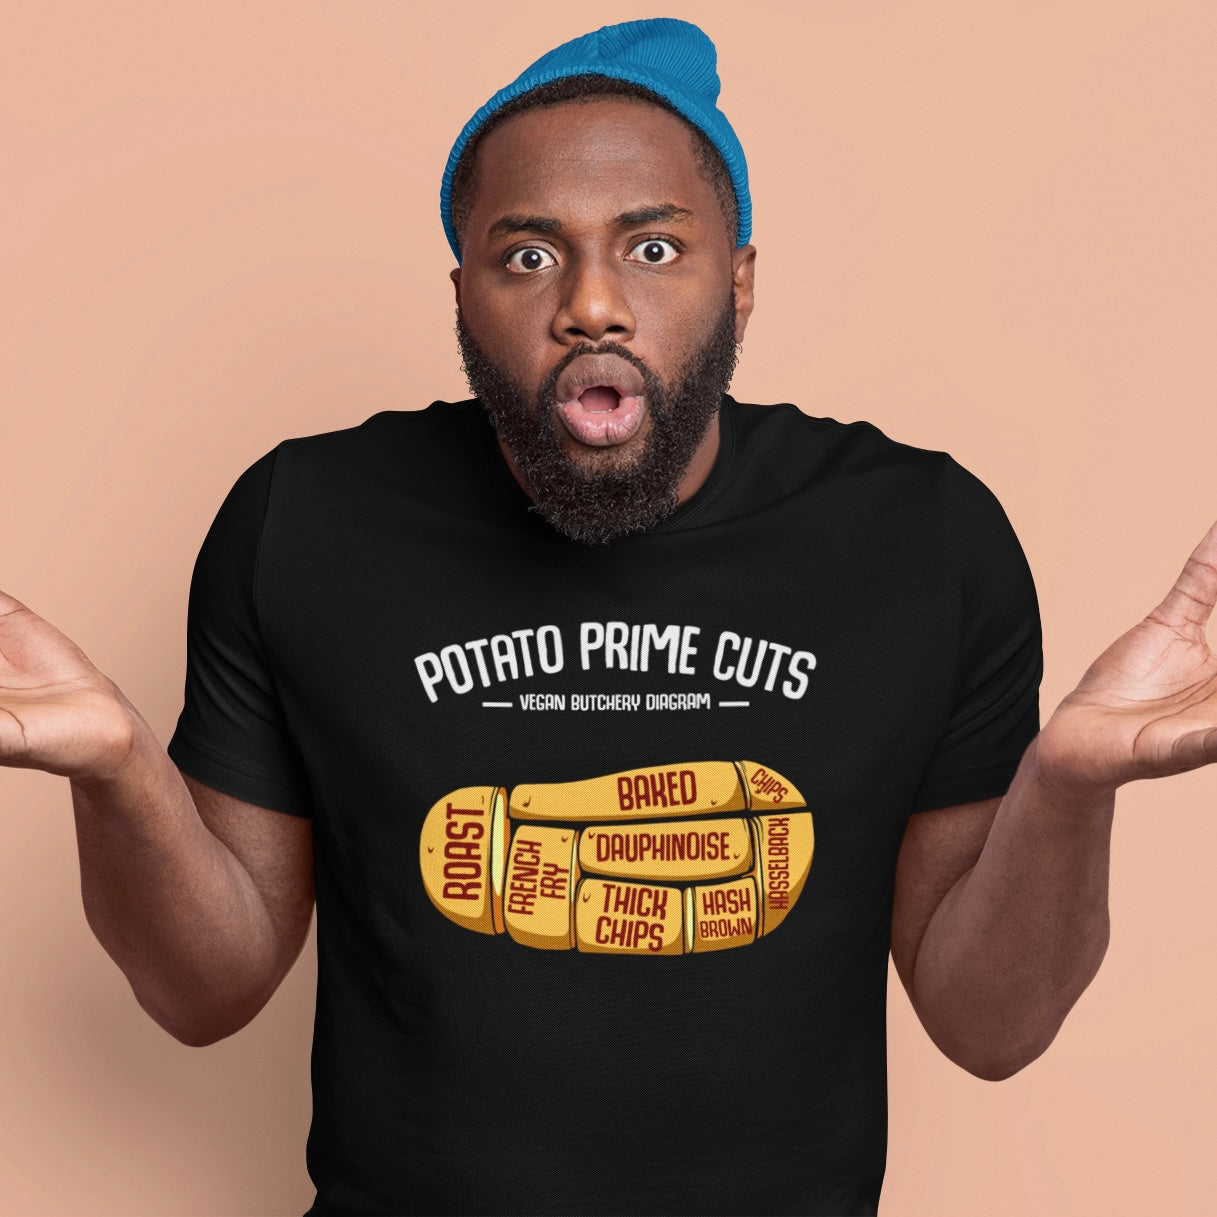 The Potato Prime Cuts T-Shirt Cleaverandblade.com